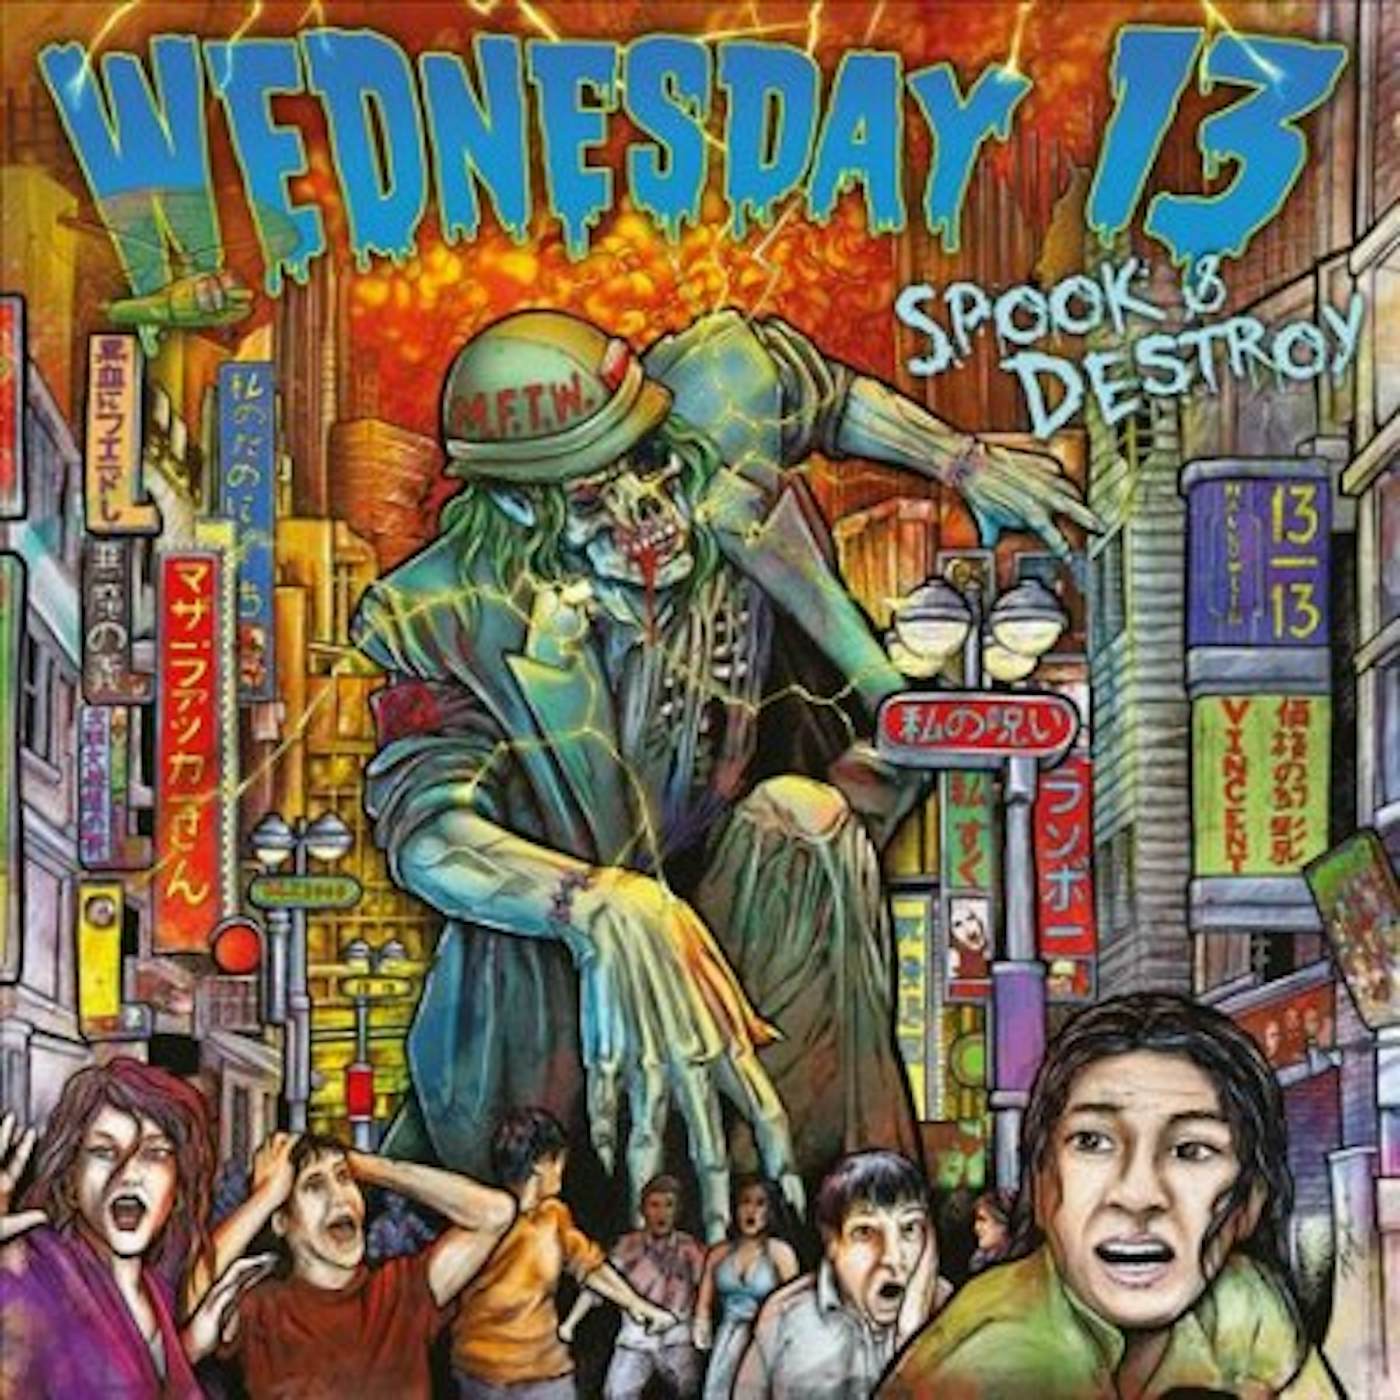 Wednesday 13 Spook & Destroy Vinyl Record